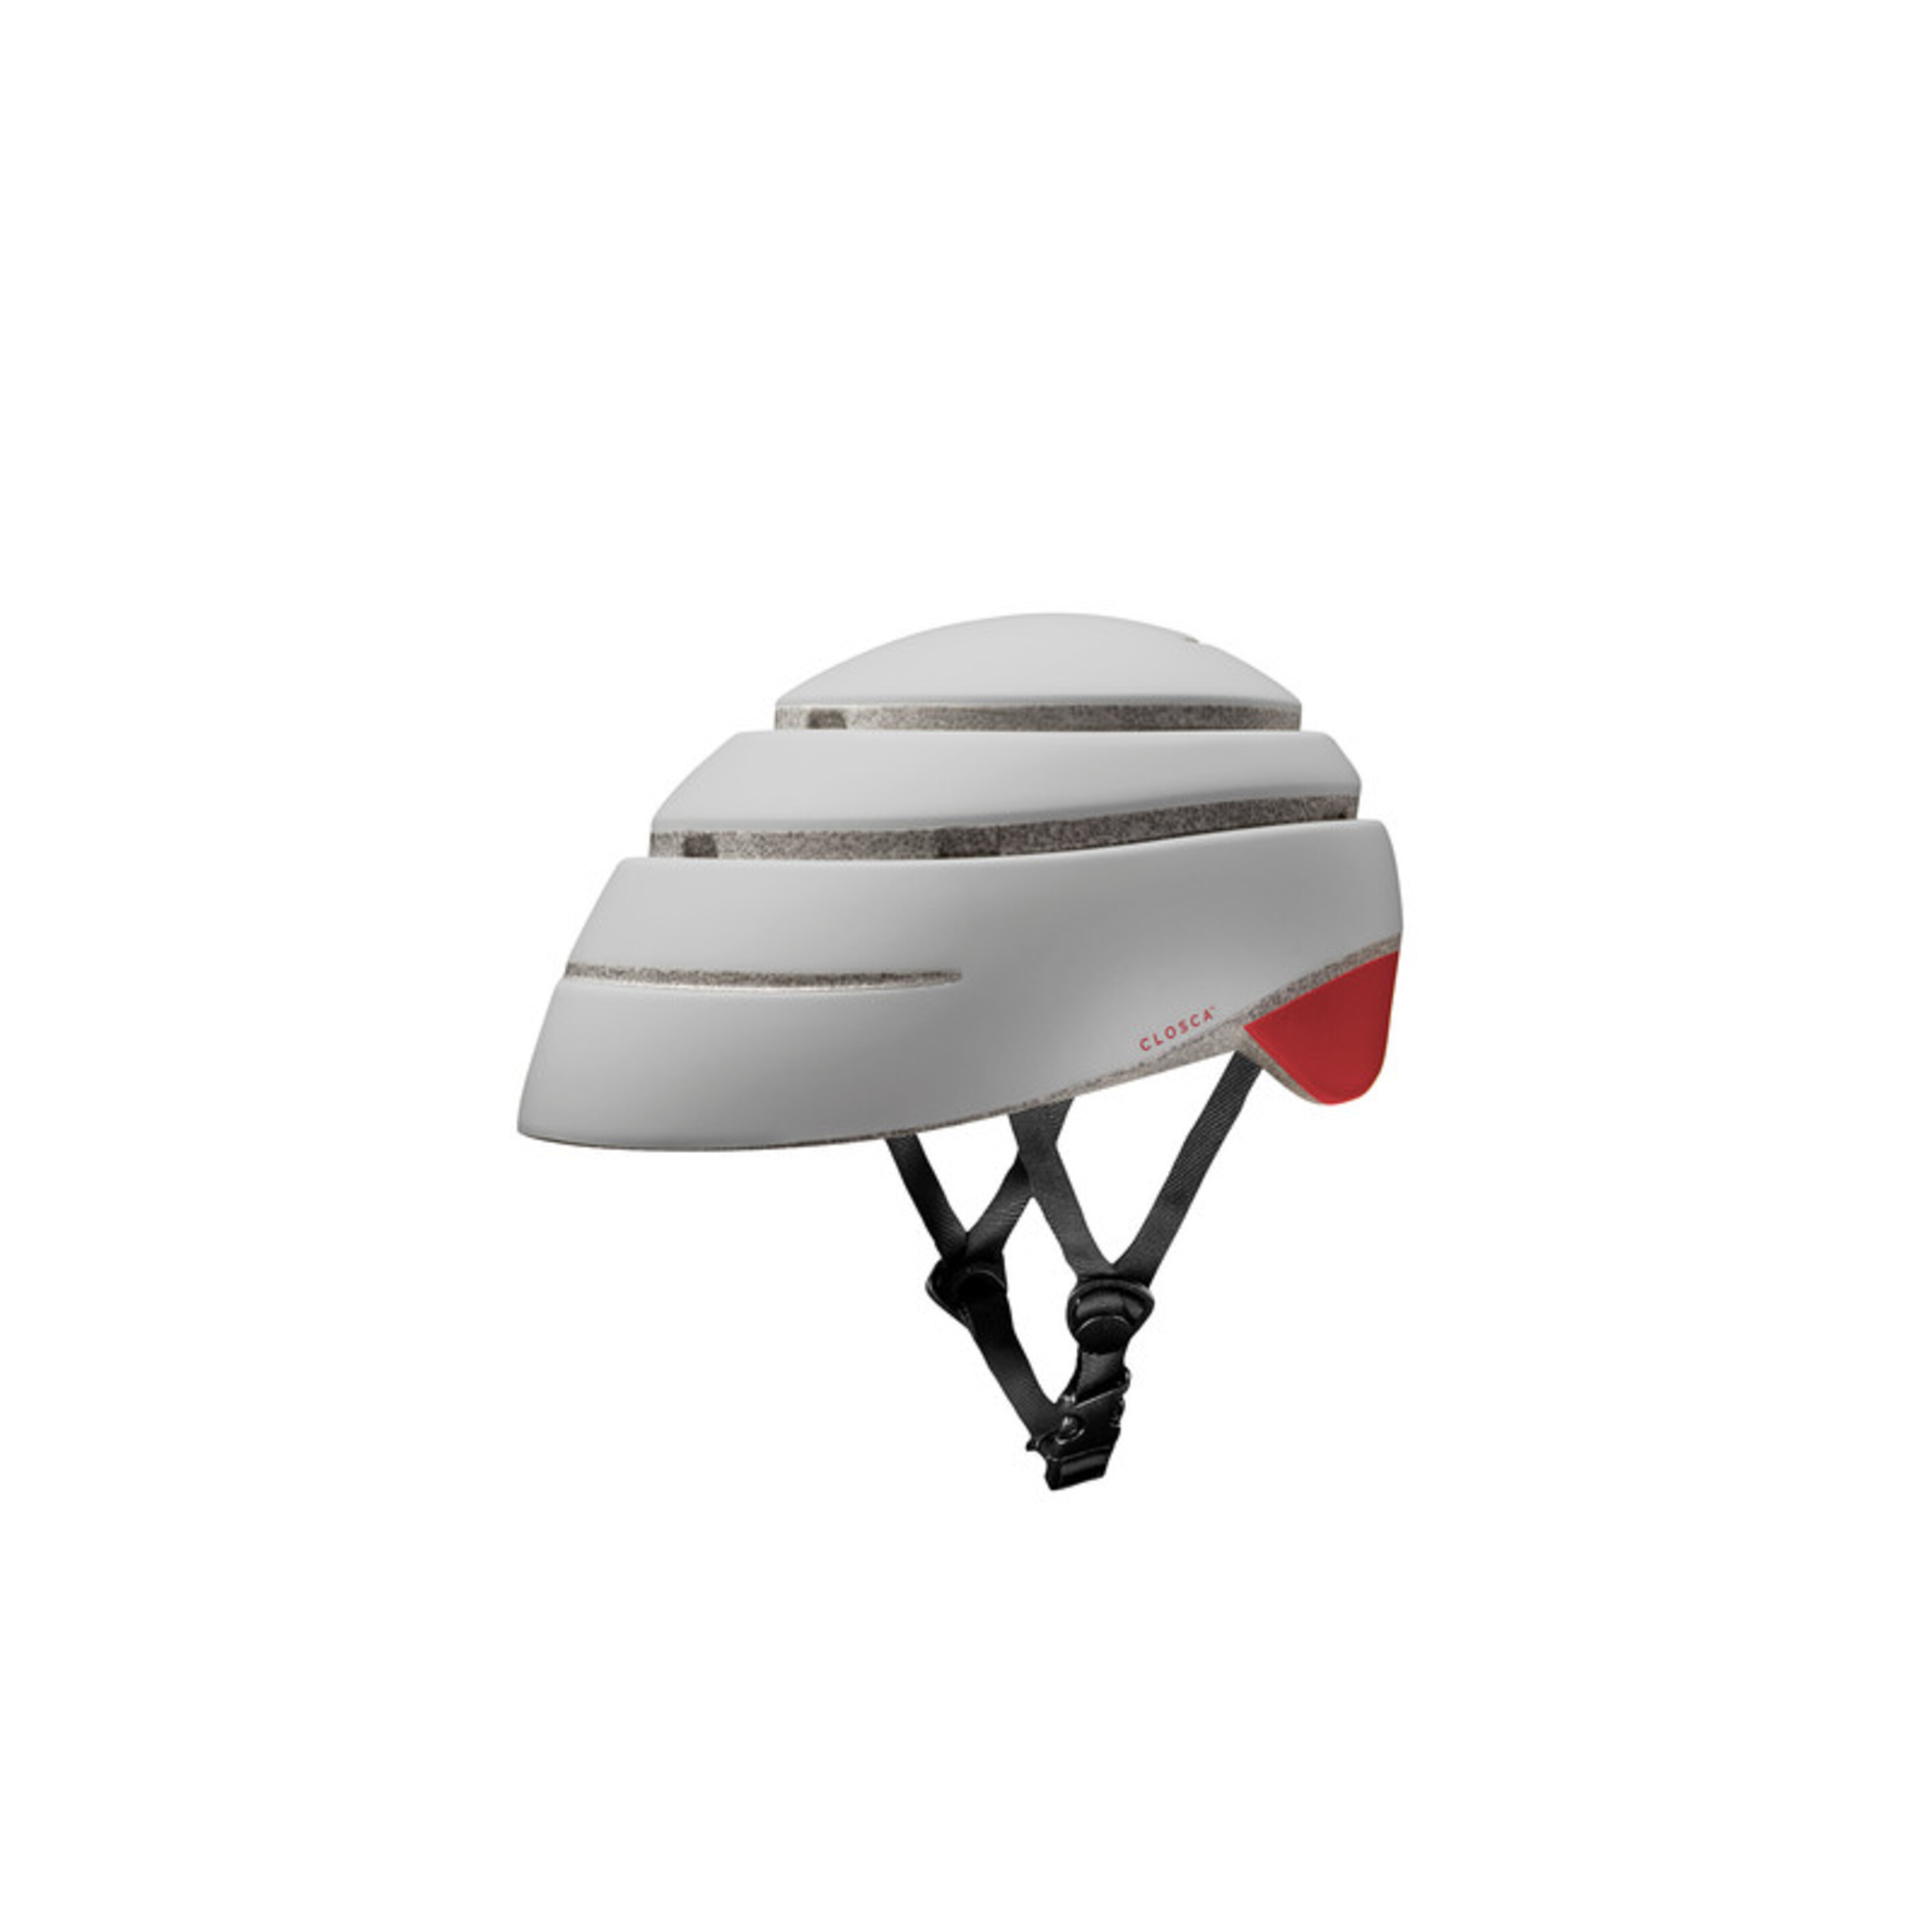 Casco De Bicicleta Plegable Closca Pearl - blanco-rojo - 